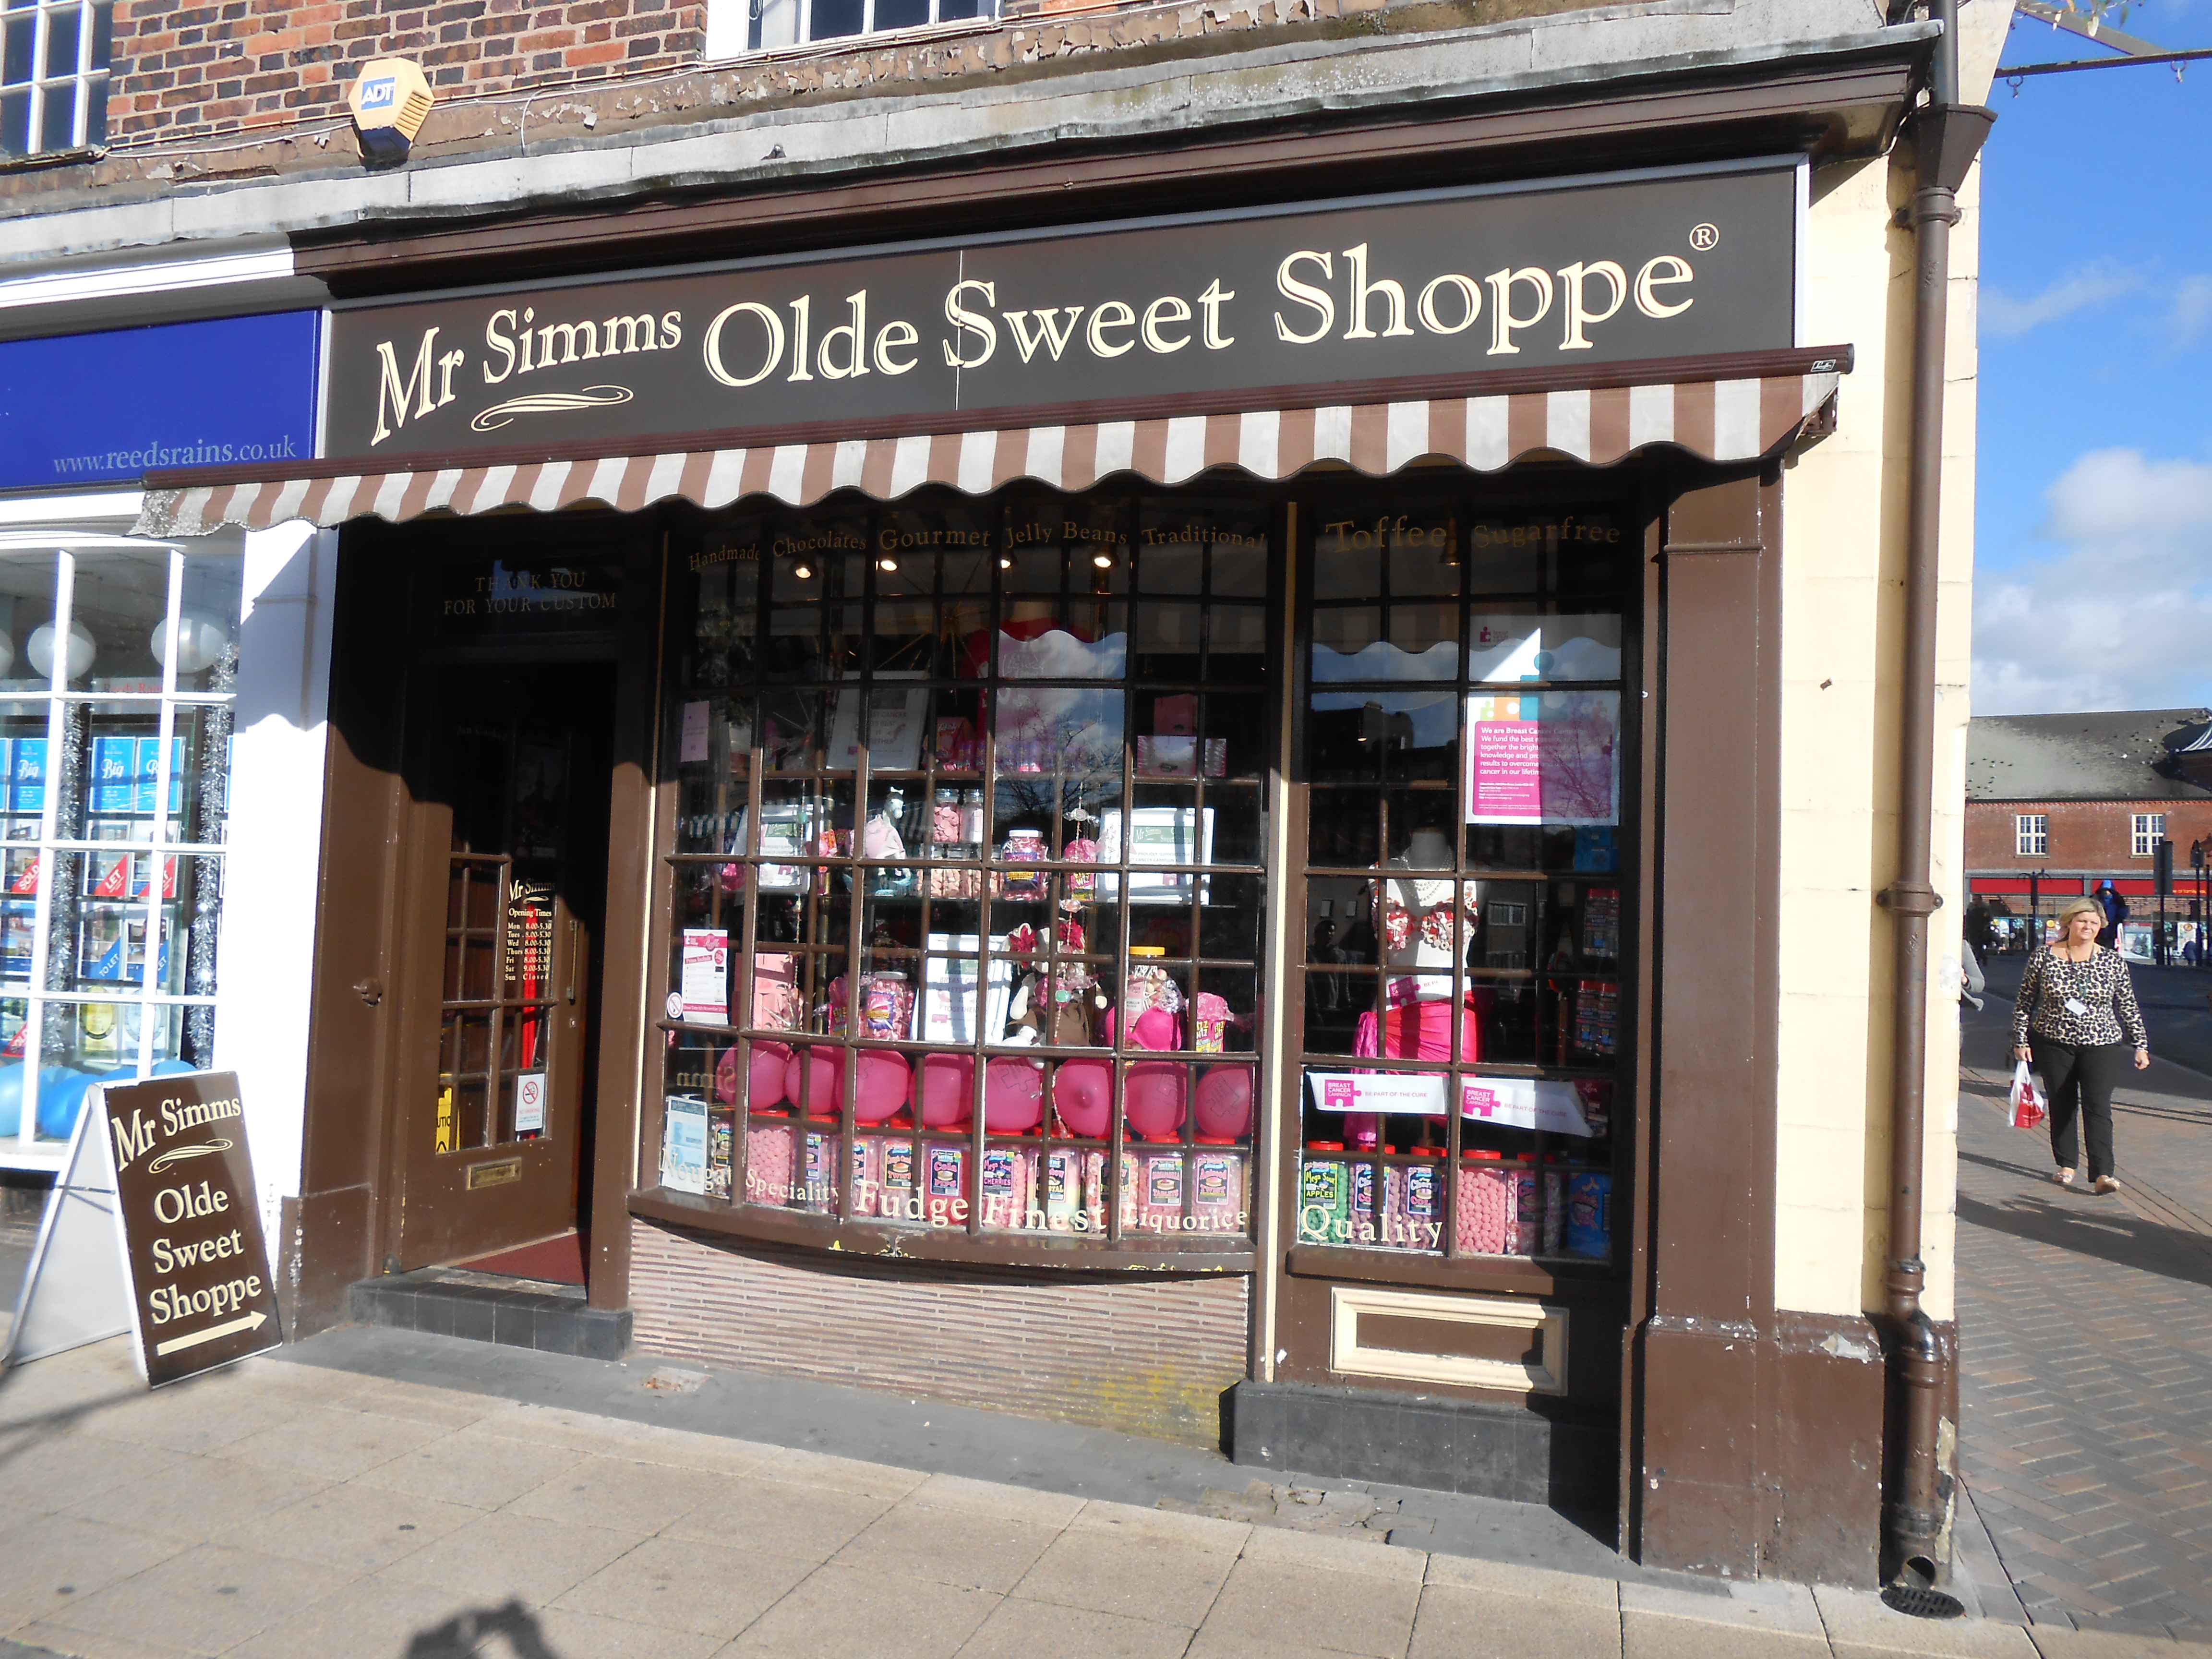 https://upload.wikimedia.org/wikipedia/commons/c/c1/Mr_Simms_Olde_Sweet_Shoppe%2C_Newcastle-under-Lyme.jpg